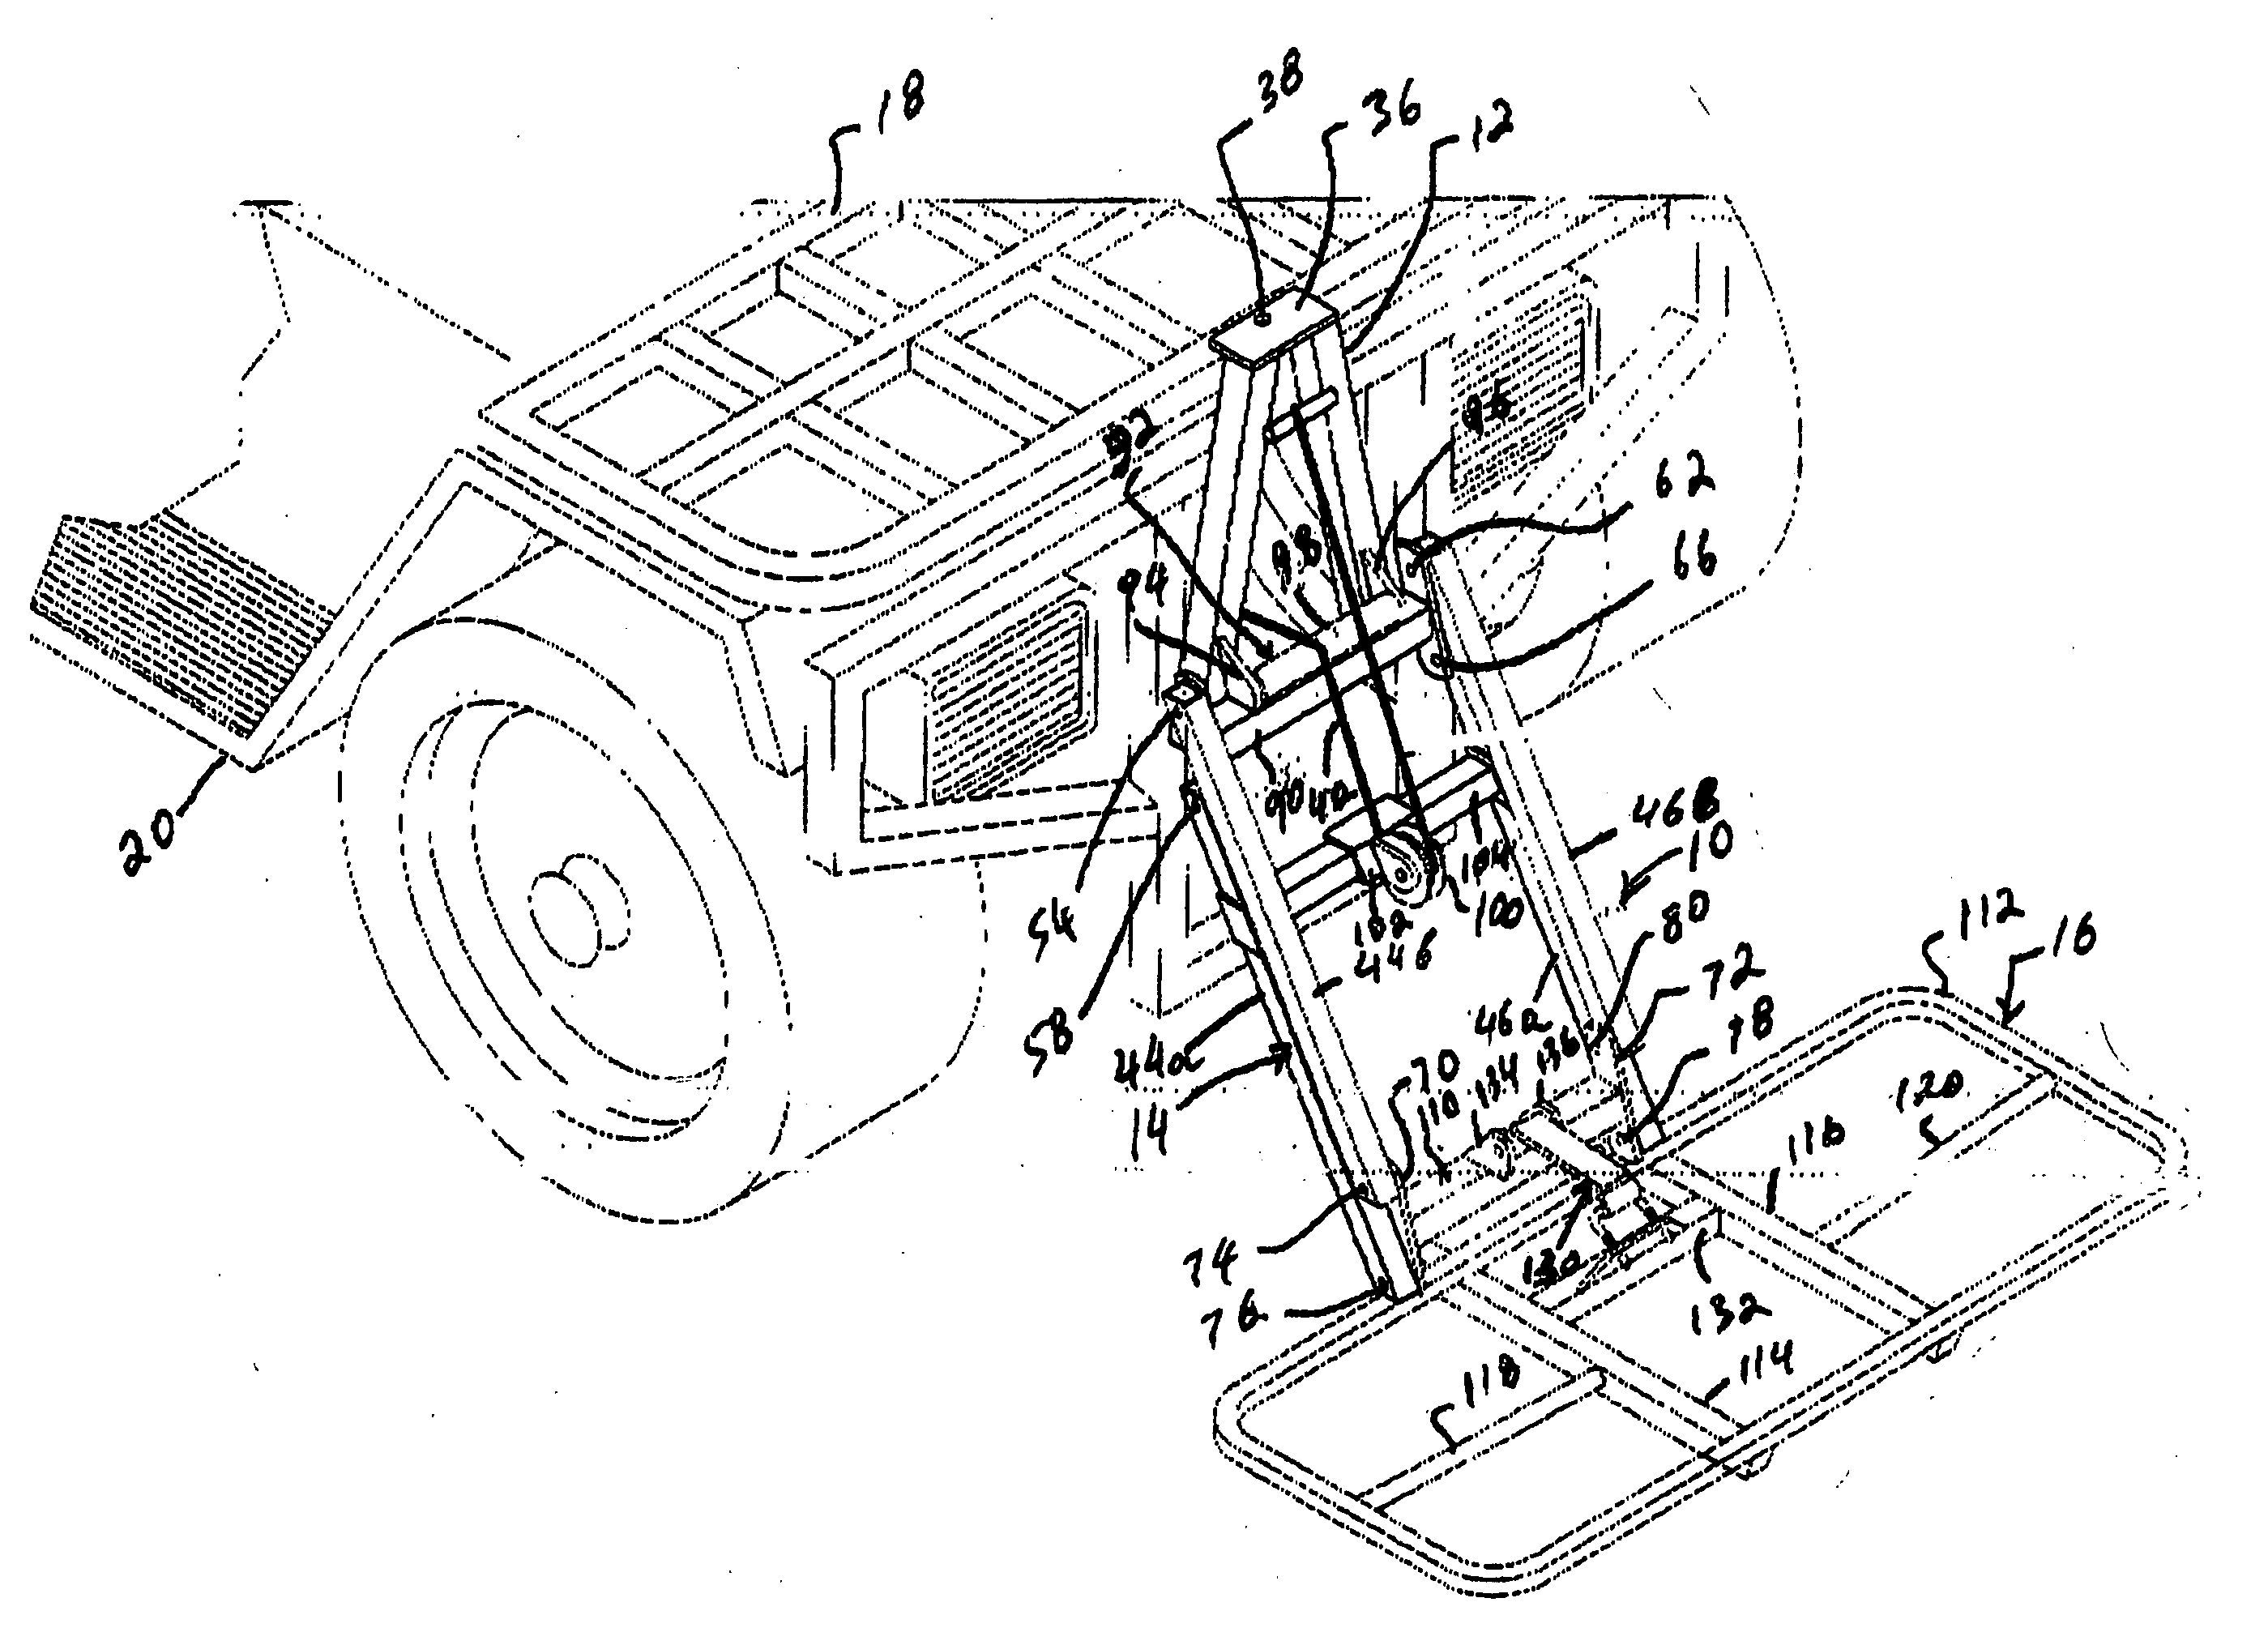 Lift apparatus for an all-terrain vehicle